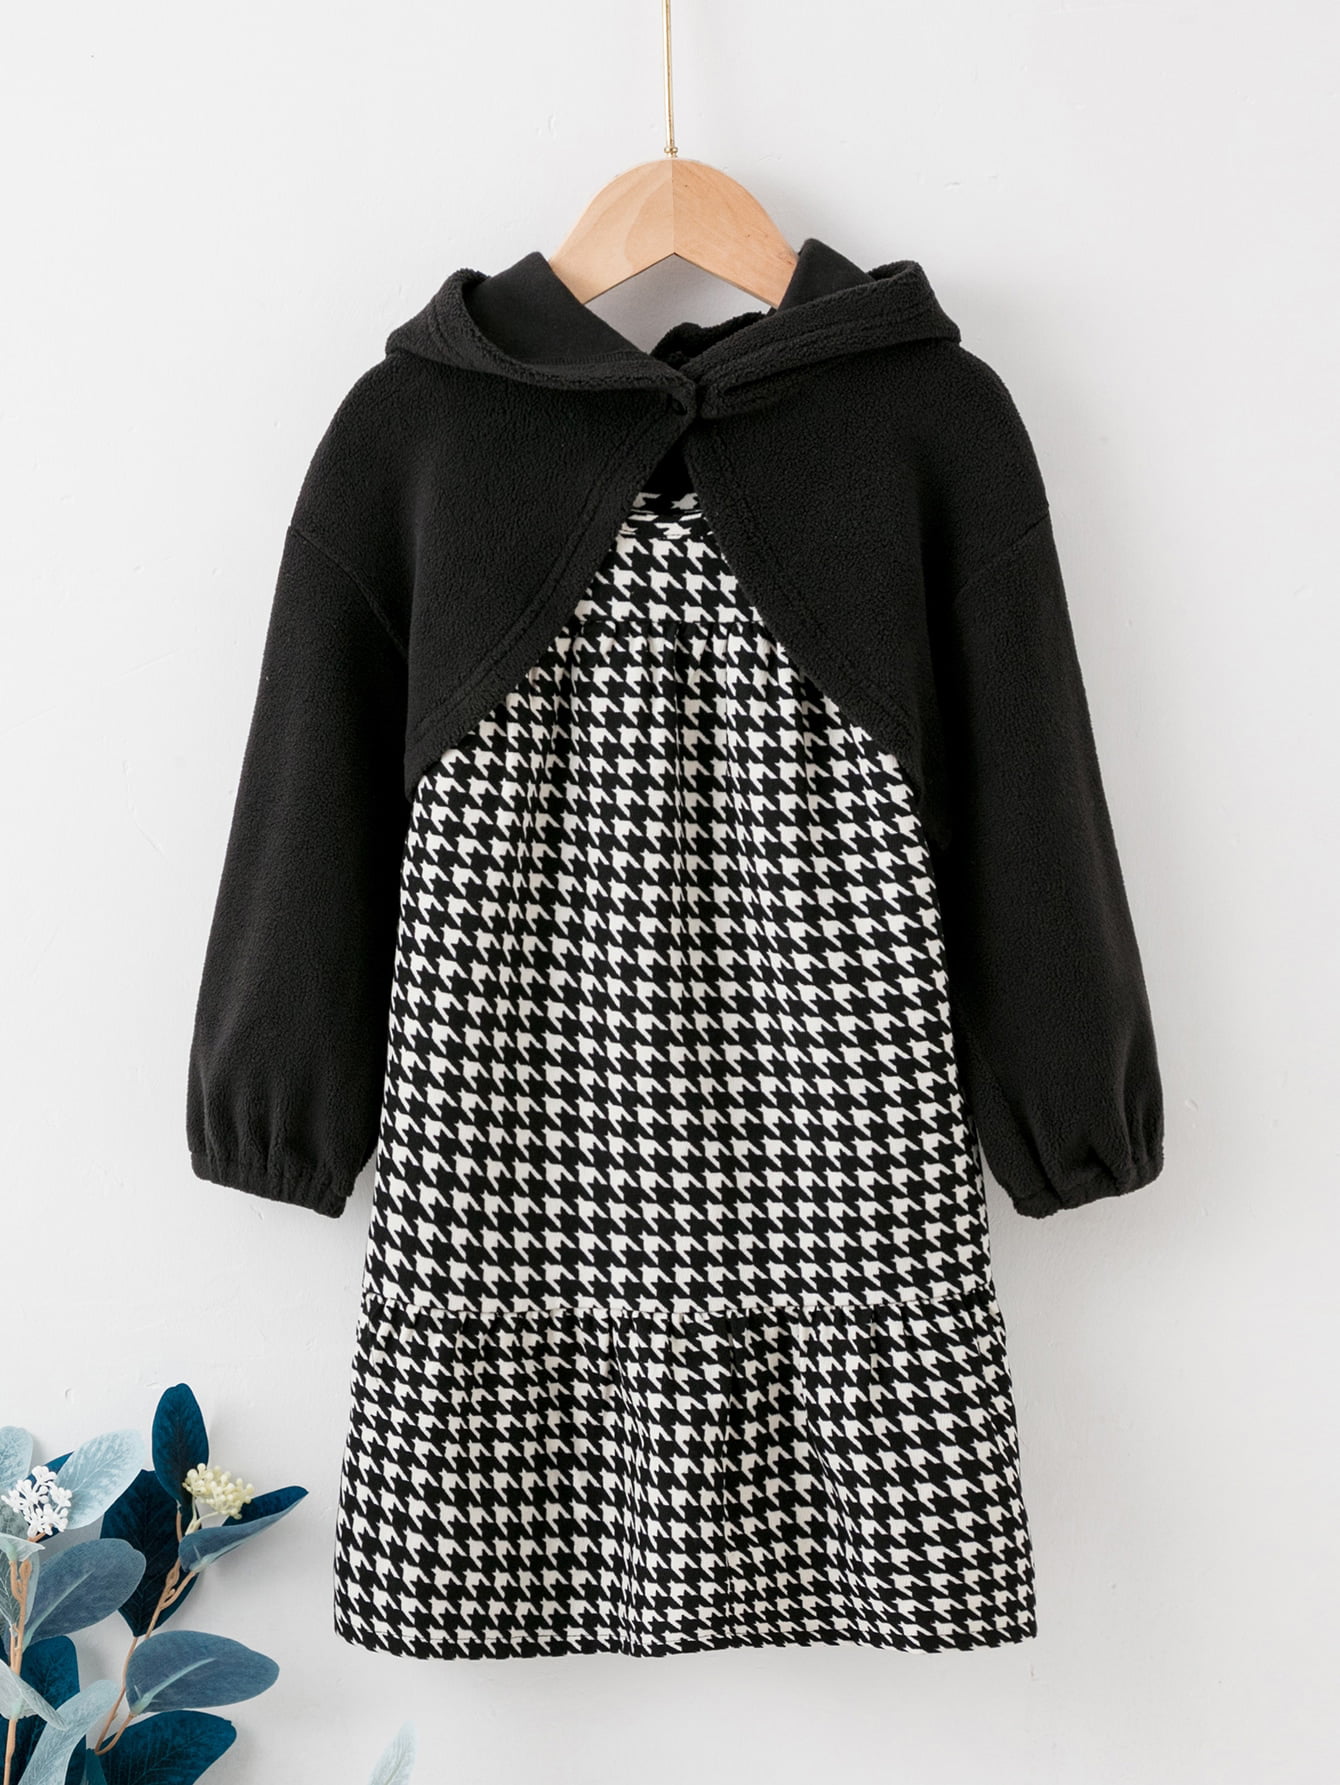 4T Toddler Girls Kidtopia Black & White Plaid Lt Weight Dress w/ Sweater Sz 2T 